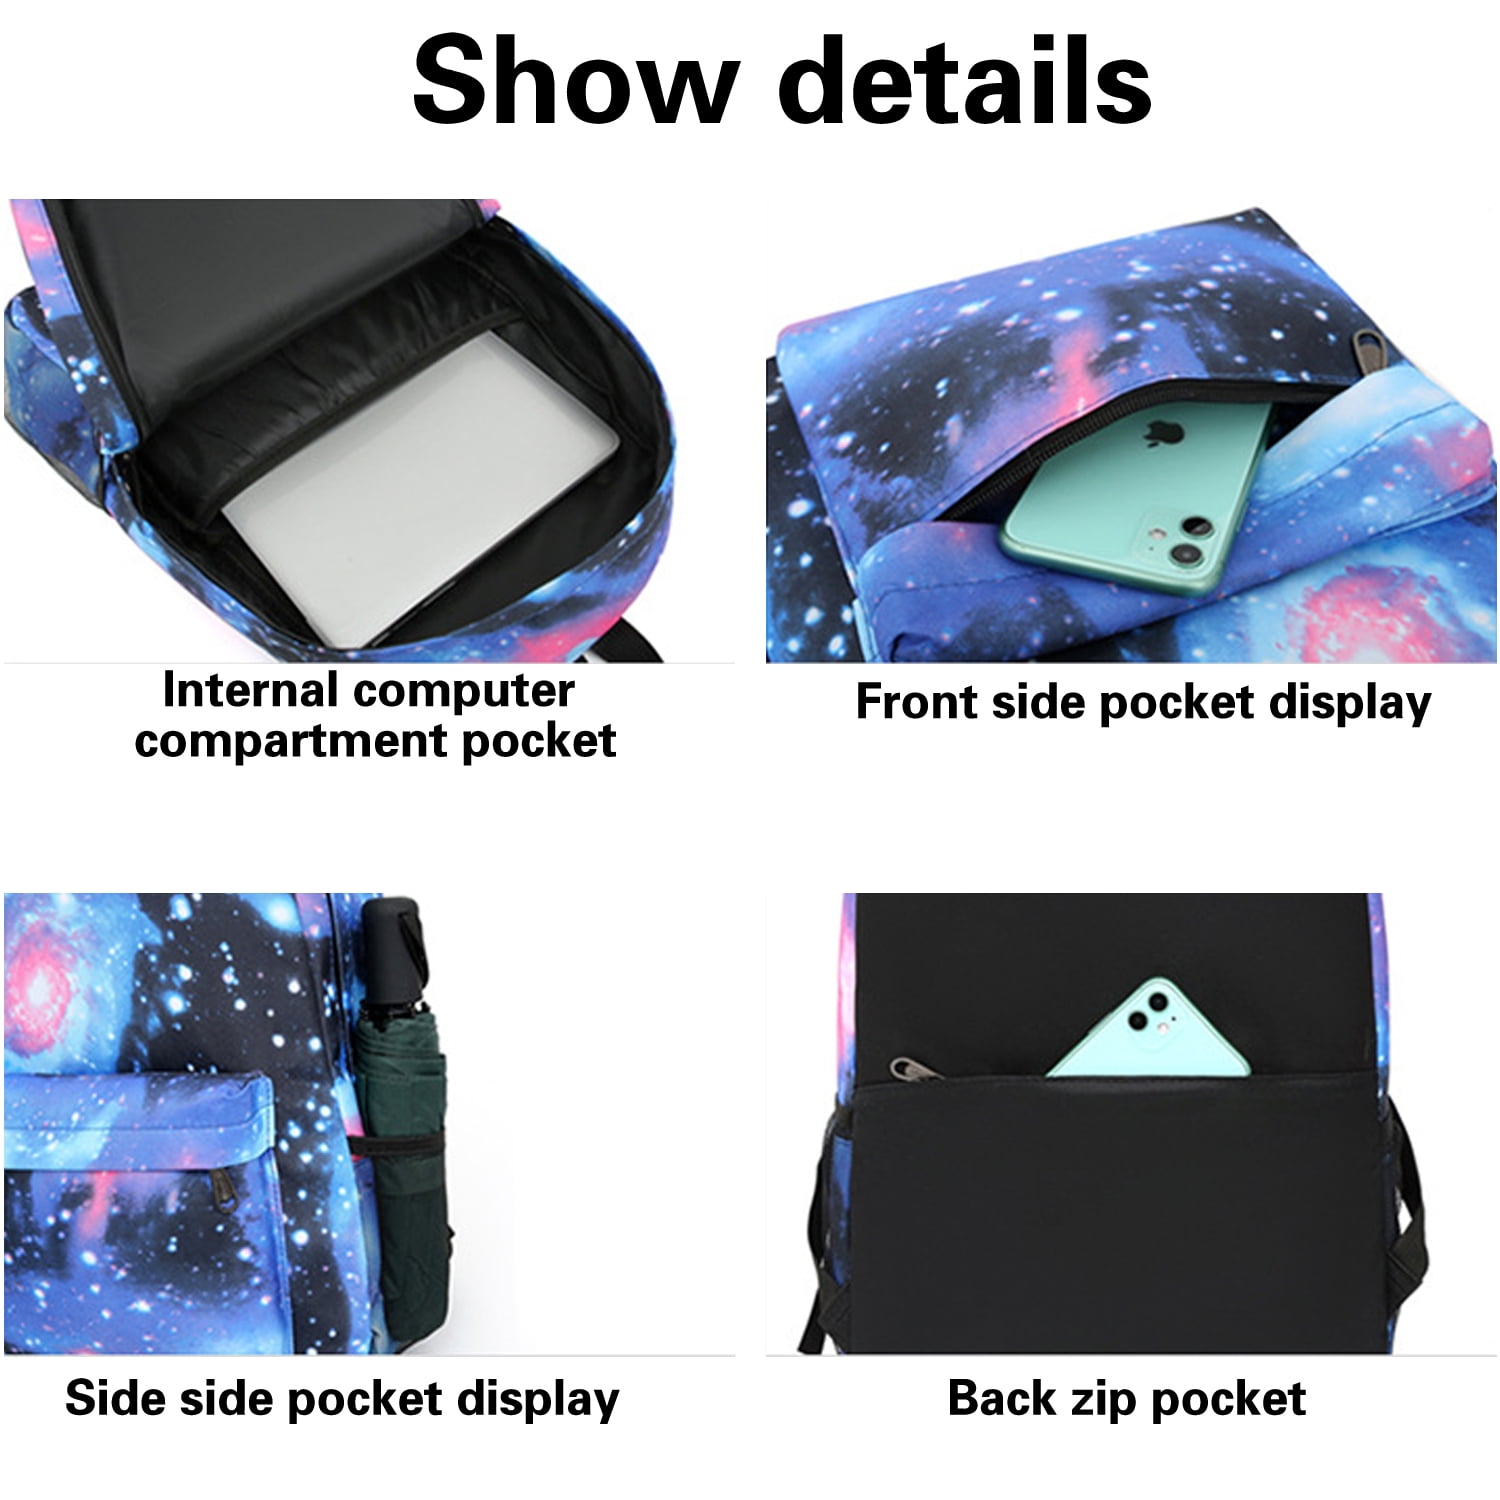 Space Stars Galaxy Custom Initials Monogram School Port Authority® Backpack